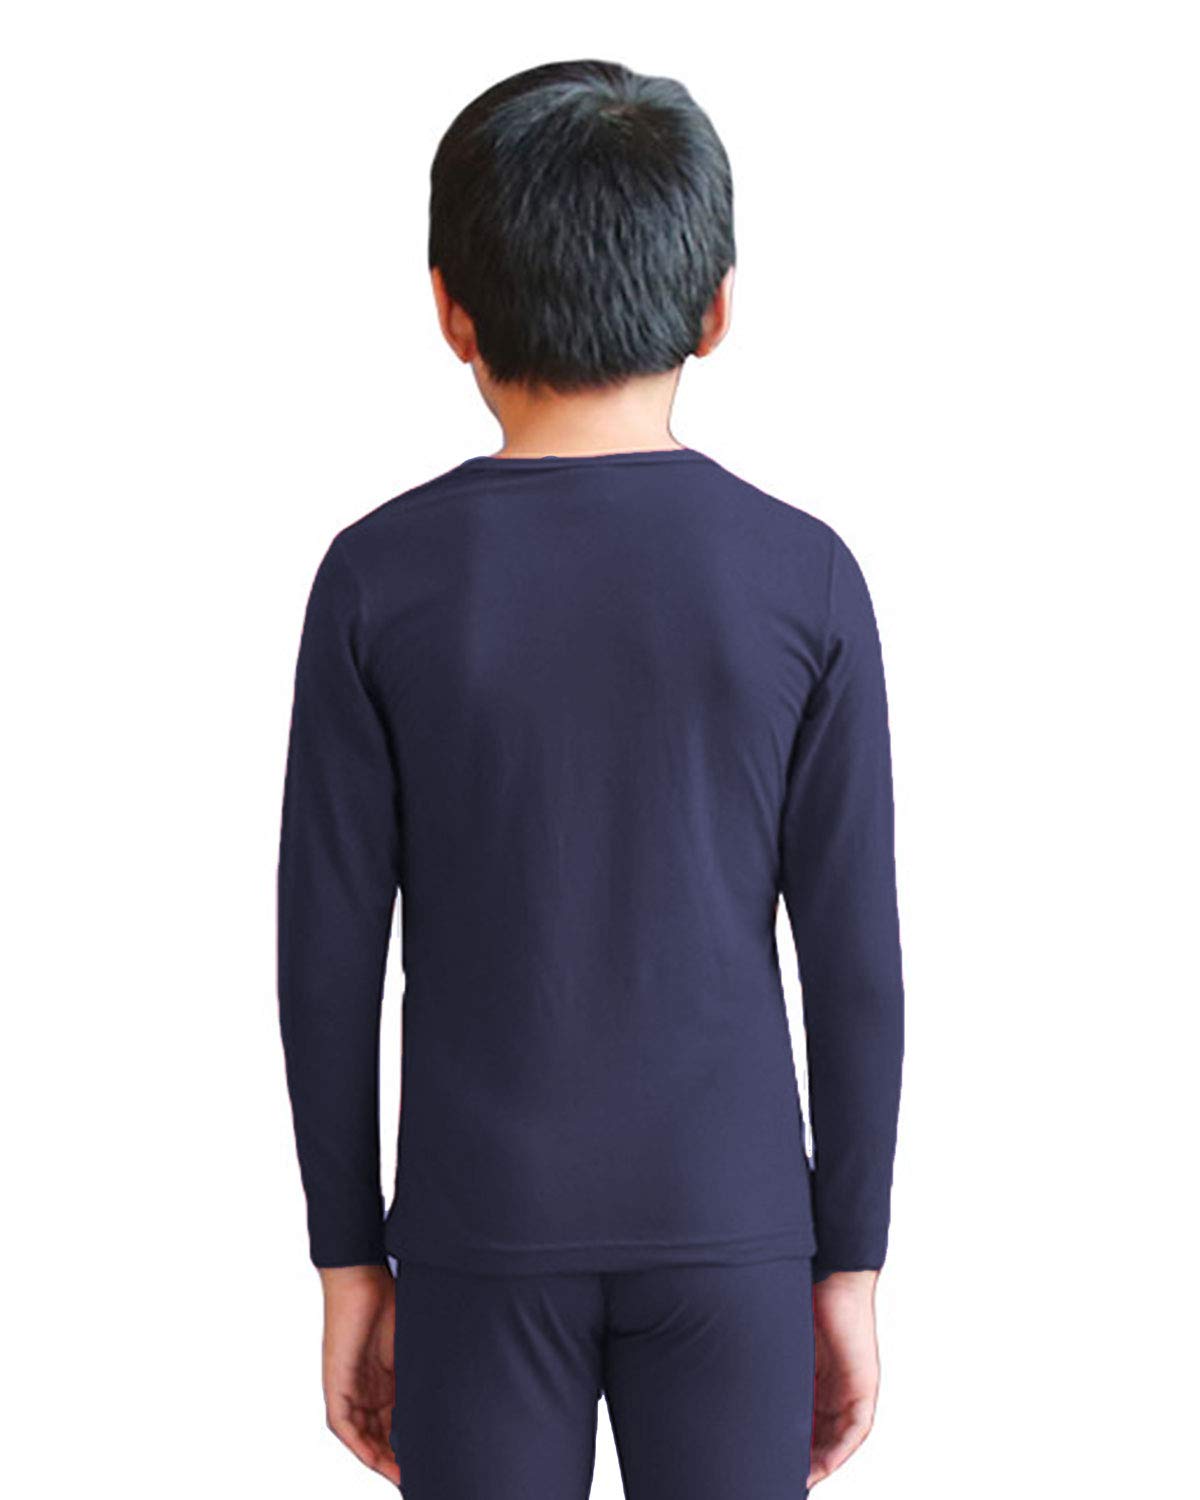 Winter Thermal Tops for Boys Fleece Lined Underwear Tee Unisex Long Sleeve Undershirts Baselayer LANBAOSI